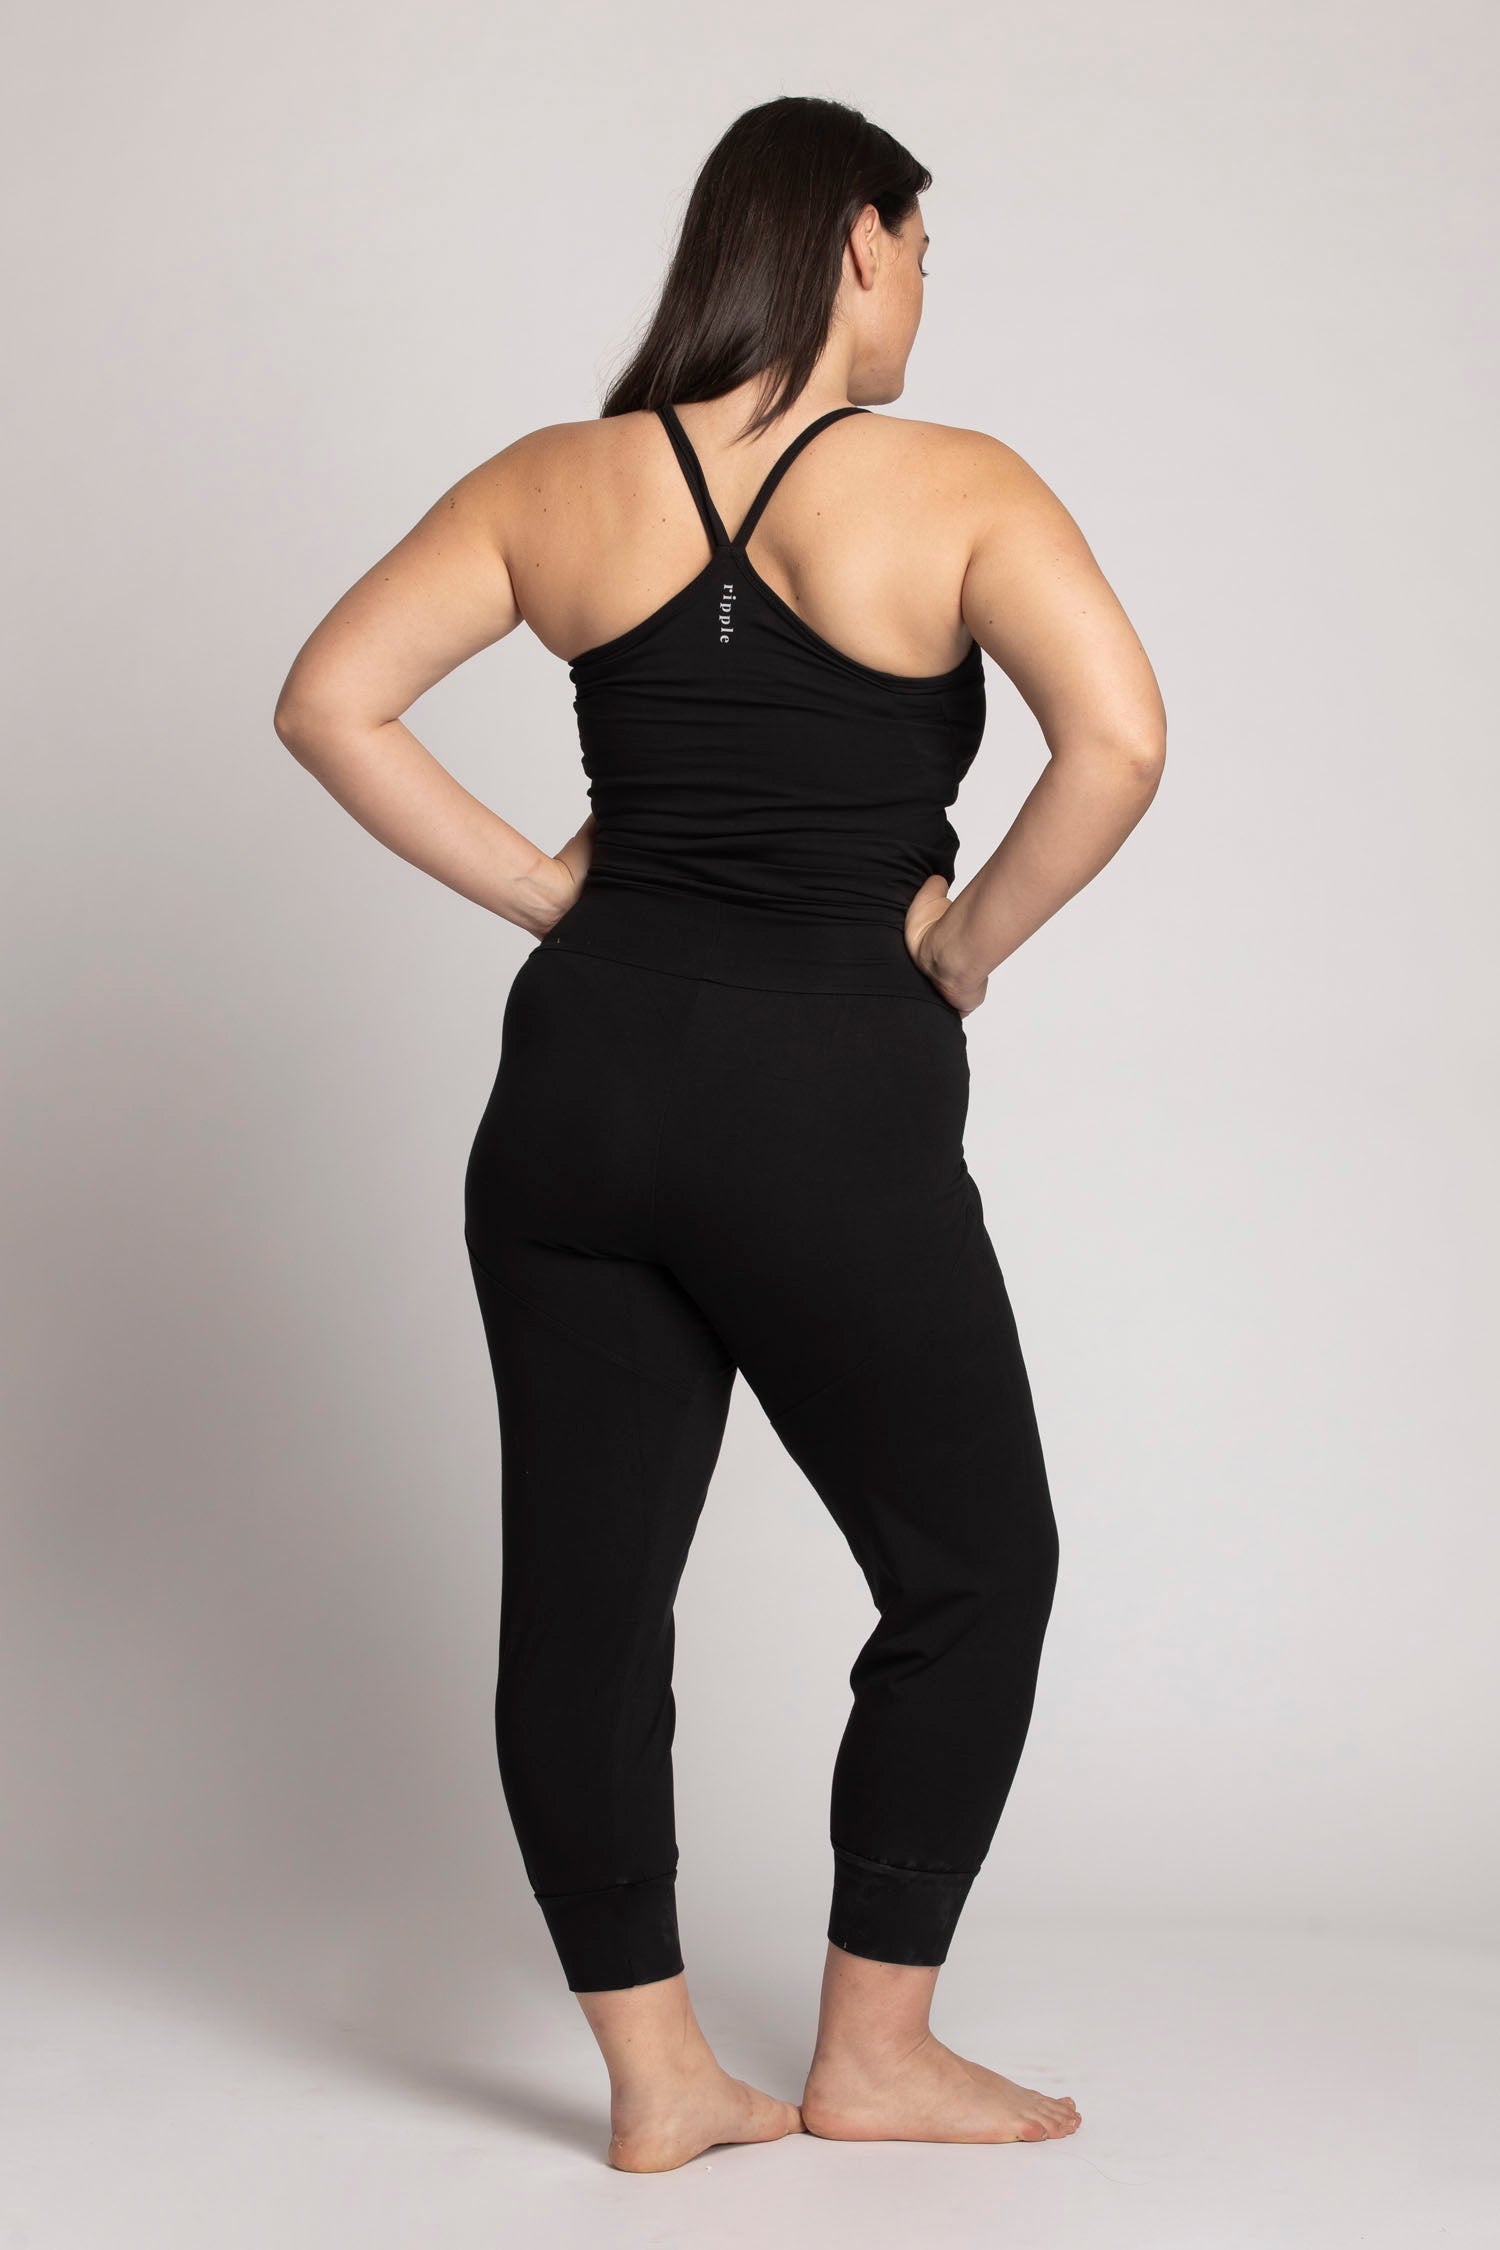 Black Yoga Romper Open Back Organic Cotton Workout Jumpsuit XS-OX -   Canada